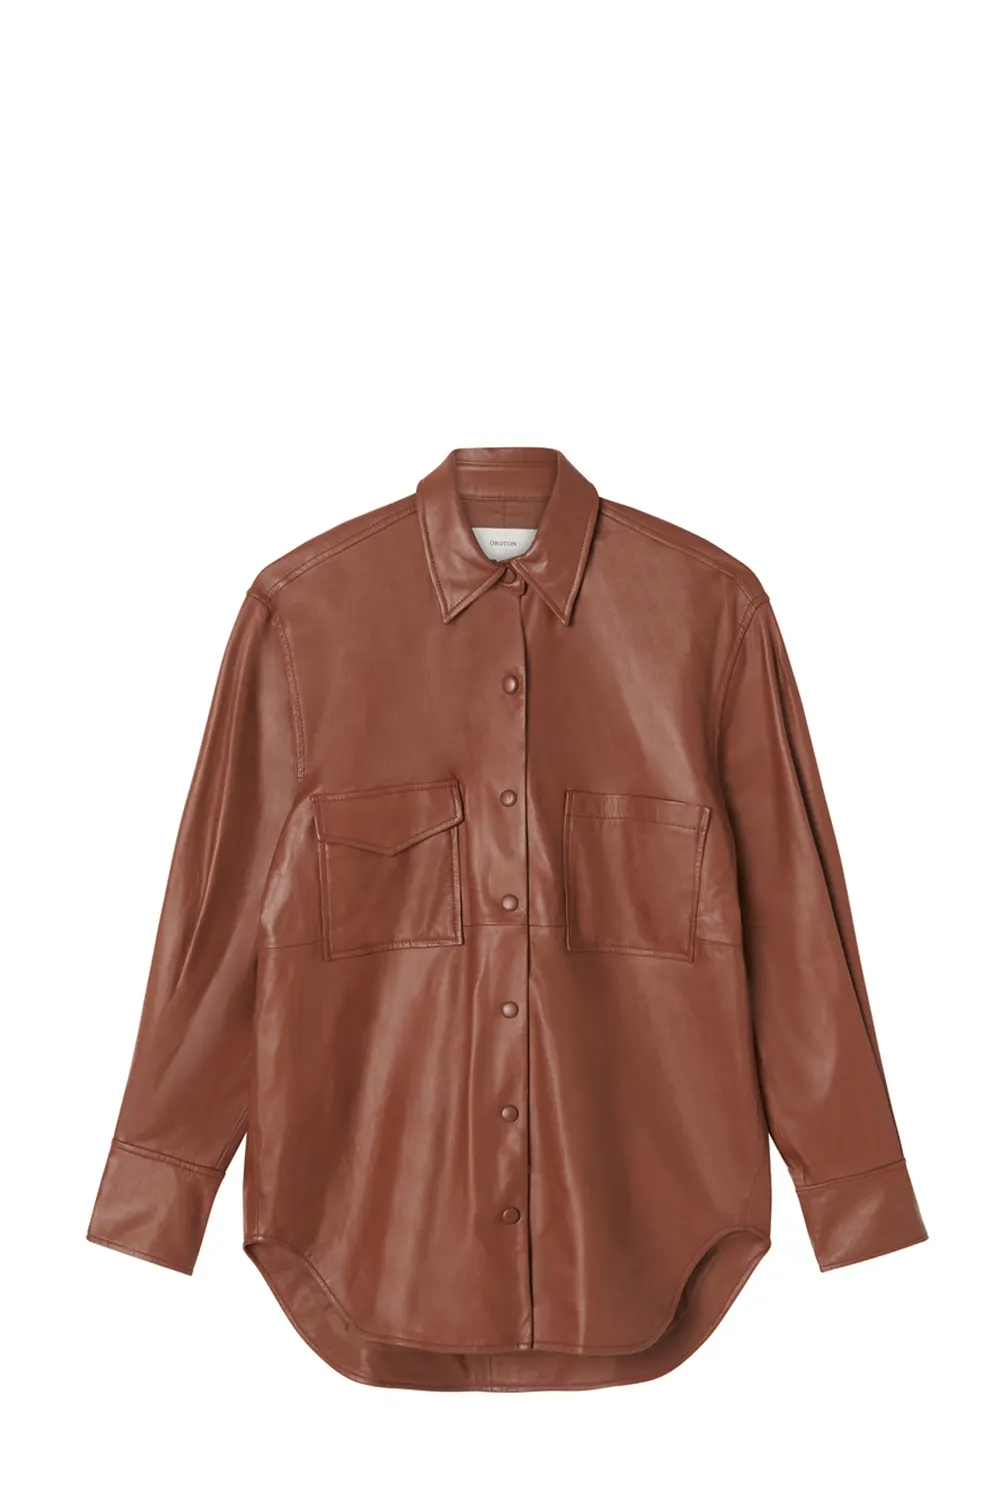 Oroton Leather Shirt Brown